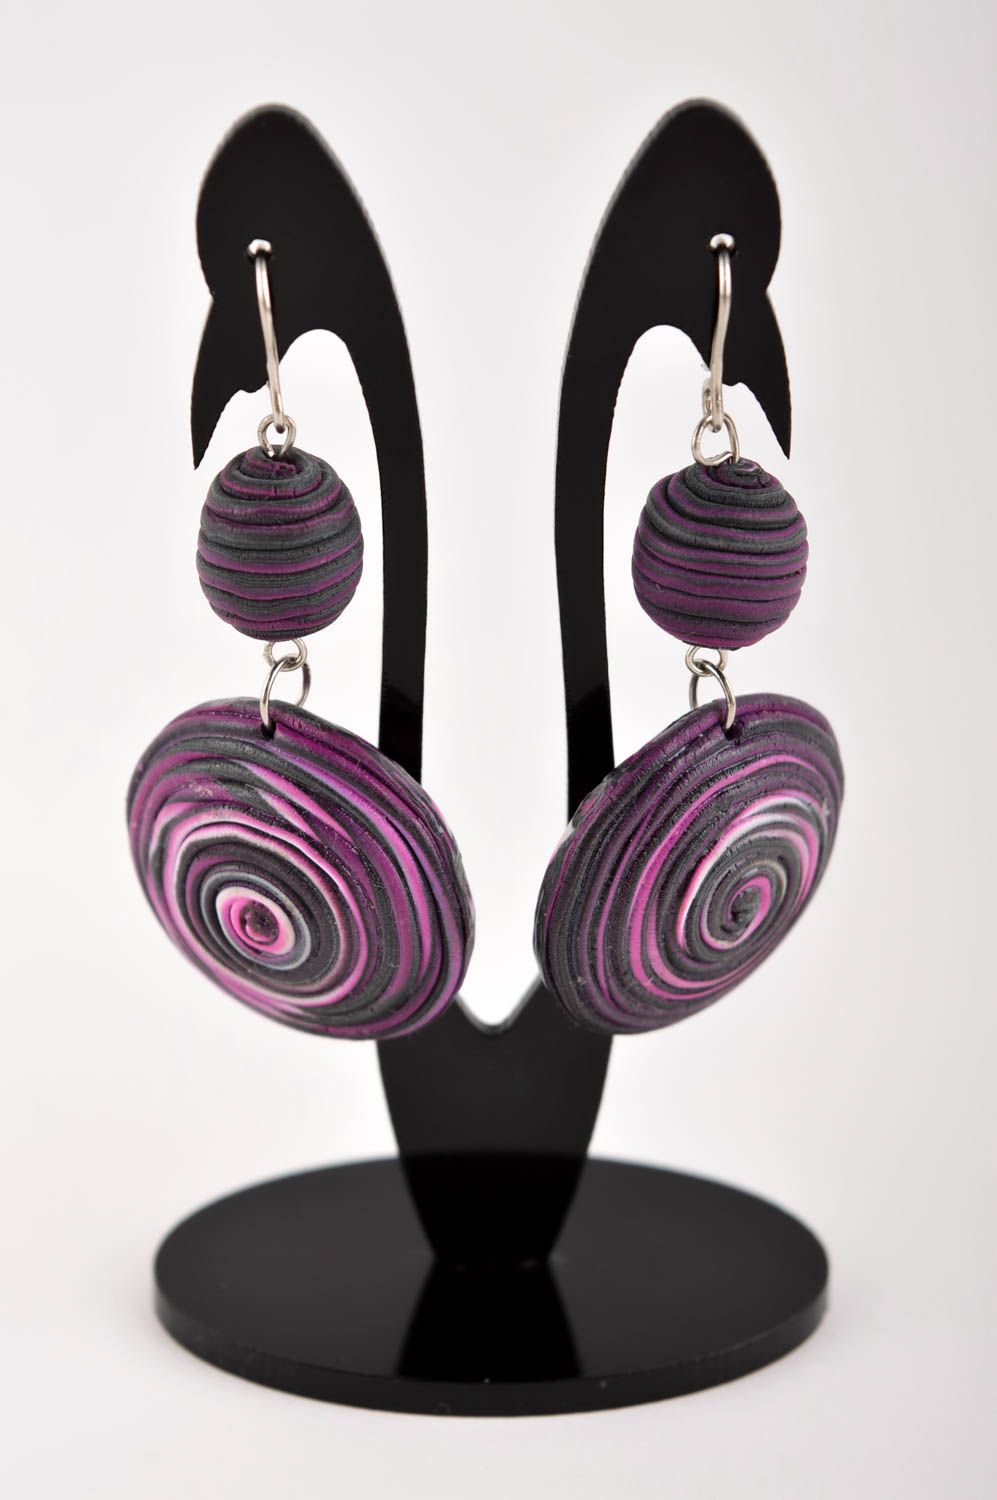 Stylish handmade plastic earrings beautiful jewellery polymer clay ideas photo 2